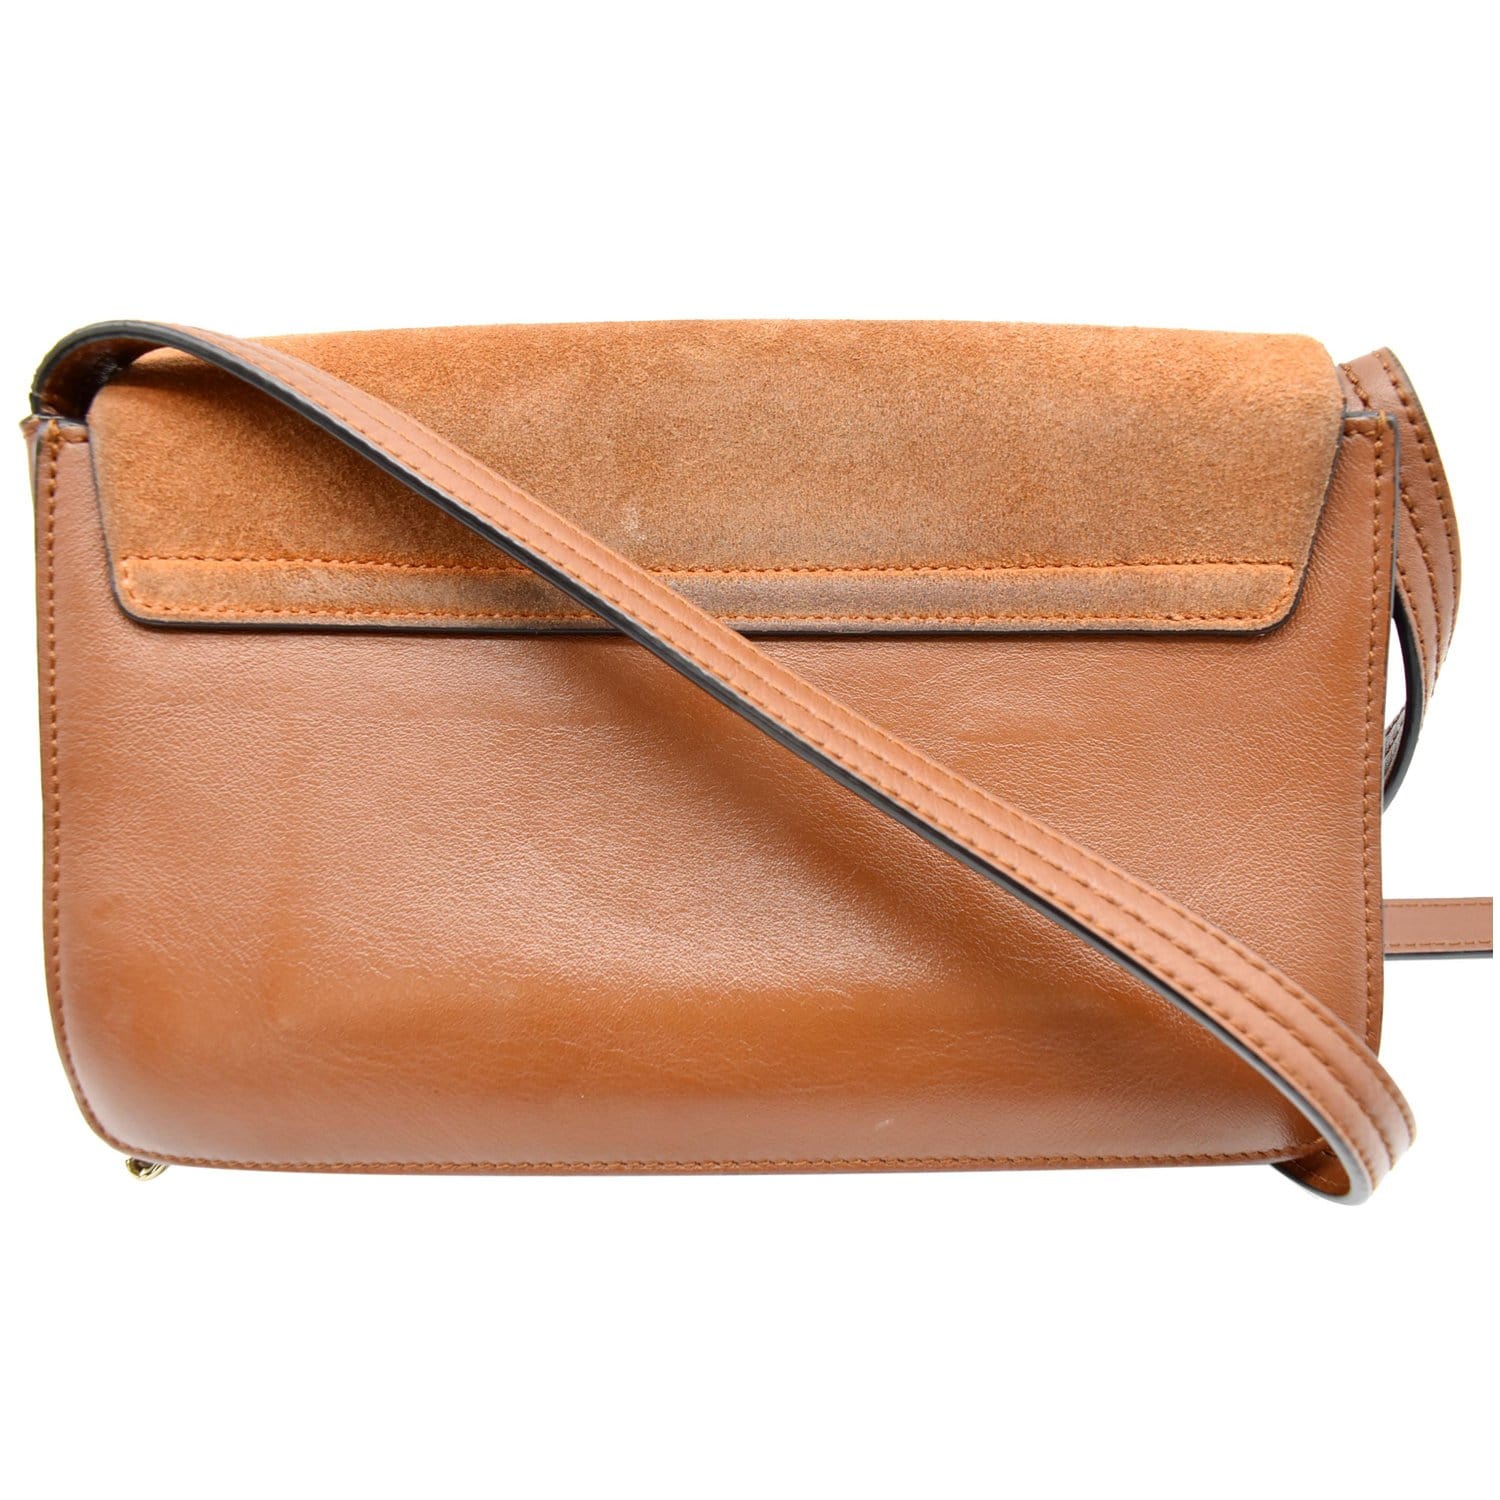 CHLOE Suede Calfskin Small Faye Shoulder Bag Tobacco : r/handbags